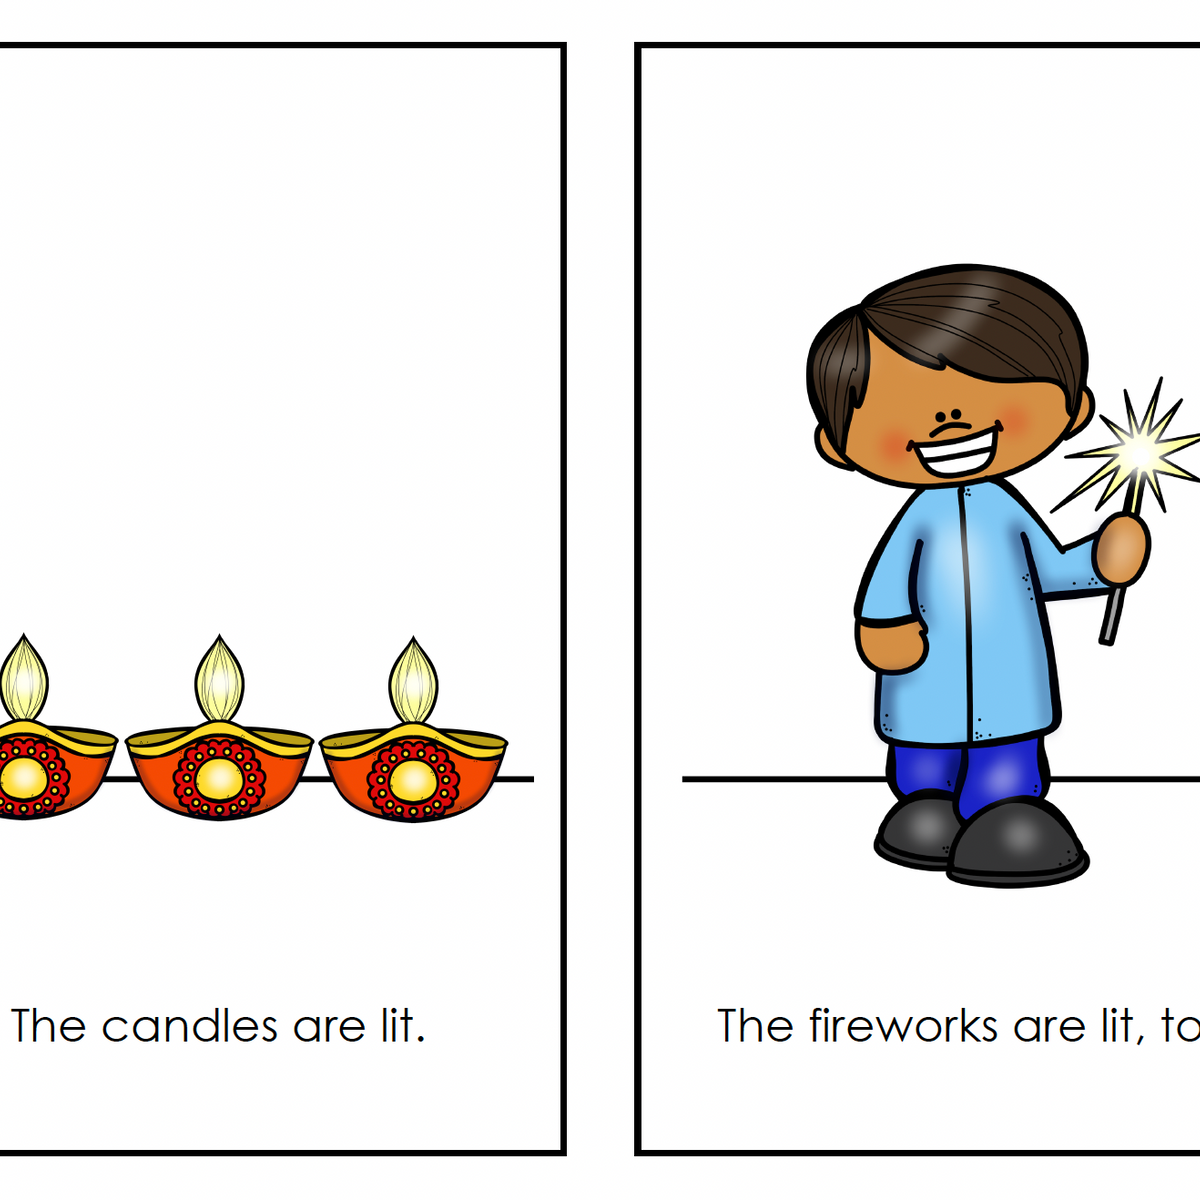 Diwali Reader - New Year - A Hindu Holiday - Kindergarten & First Social Studies